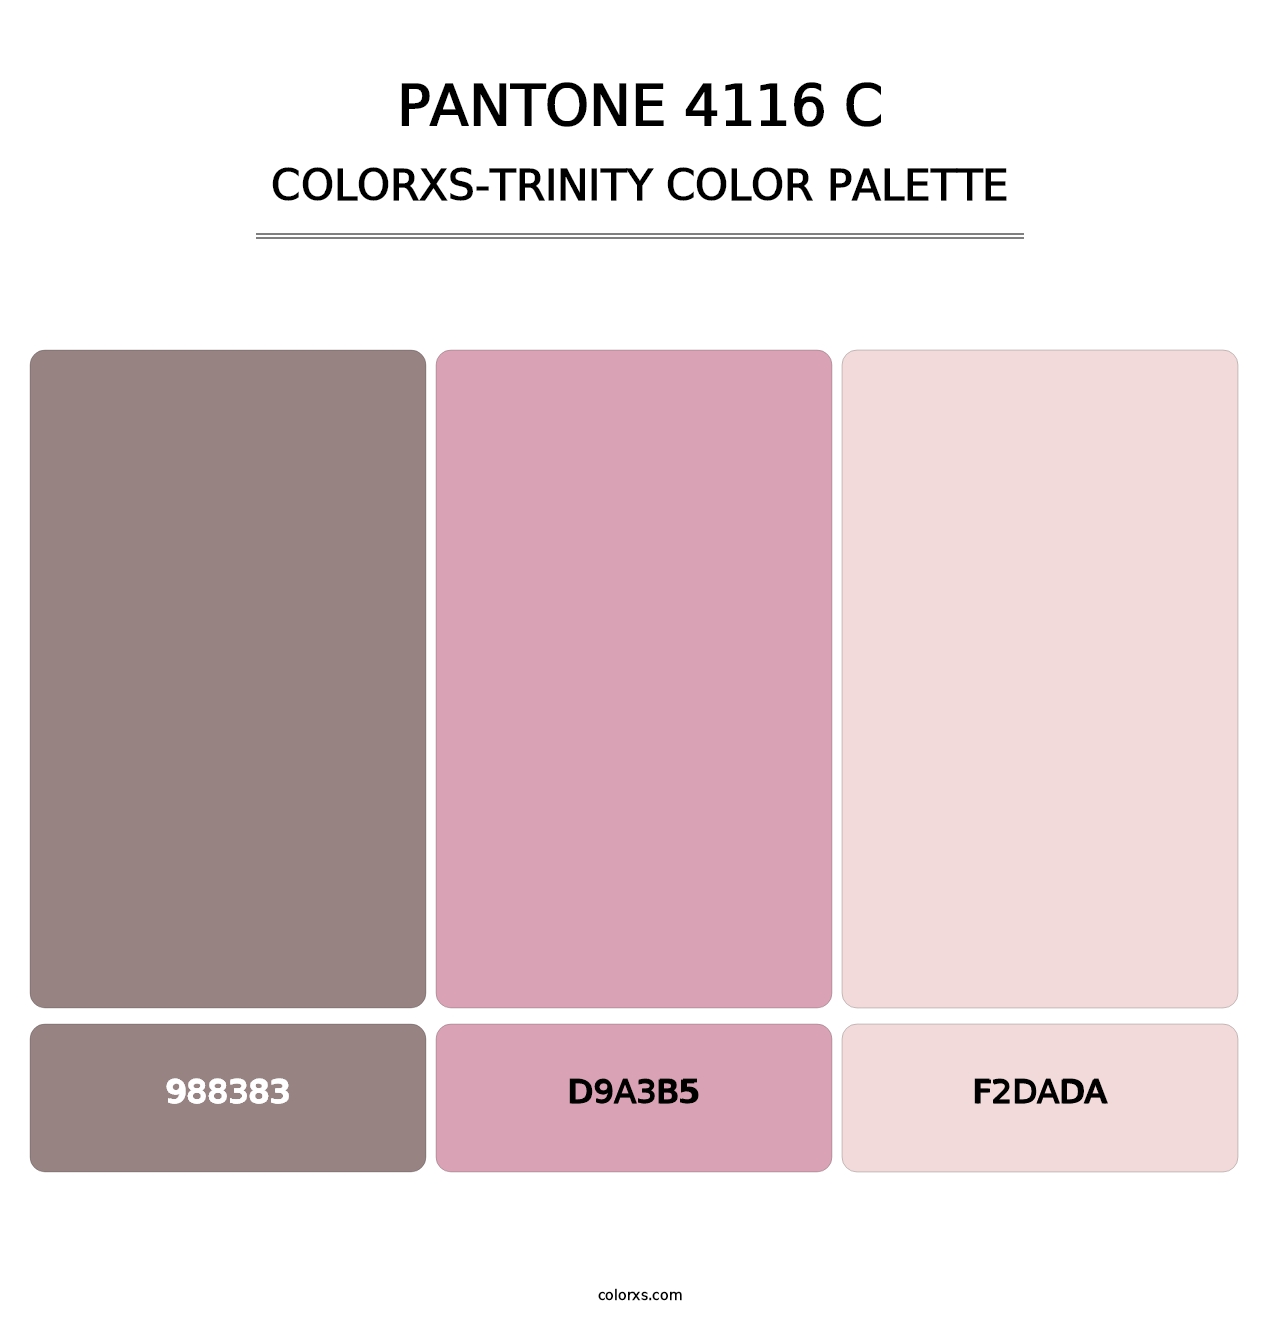 PANTONE 4116 C - Colorxs Trinity Palette